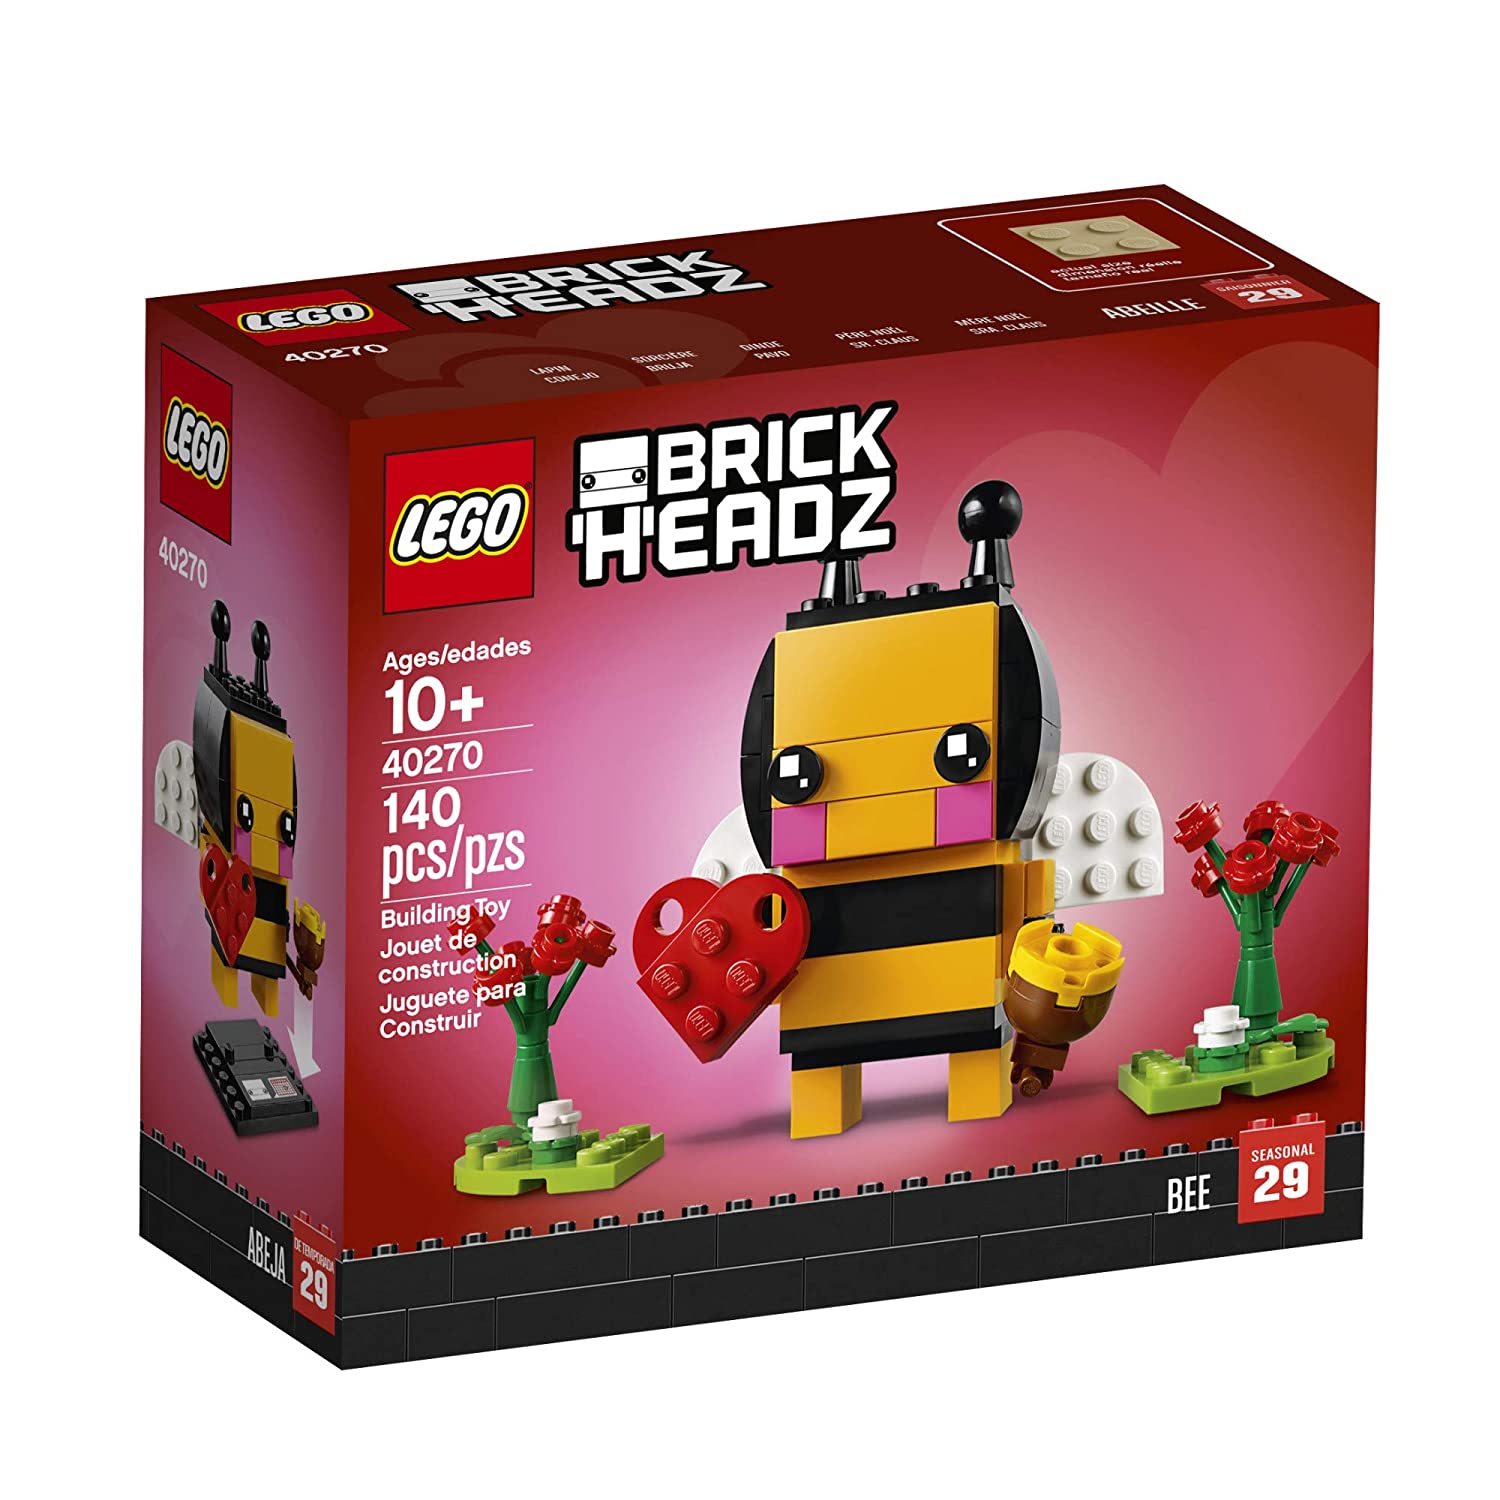 11 Best Lego Brickheadz 2023 - Buying Guide & Reviews 1